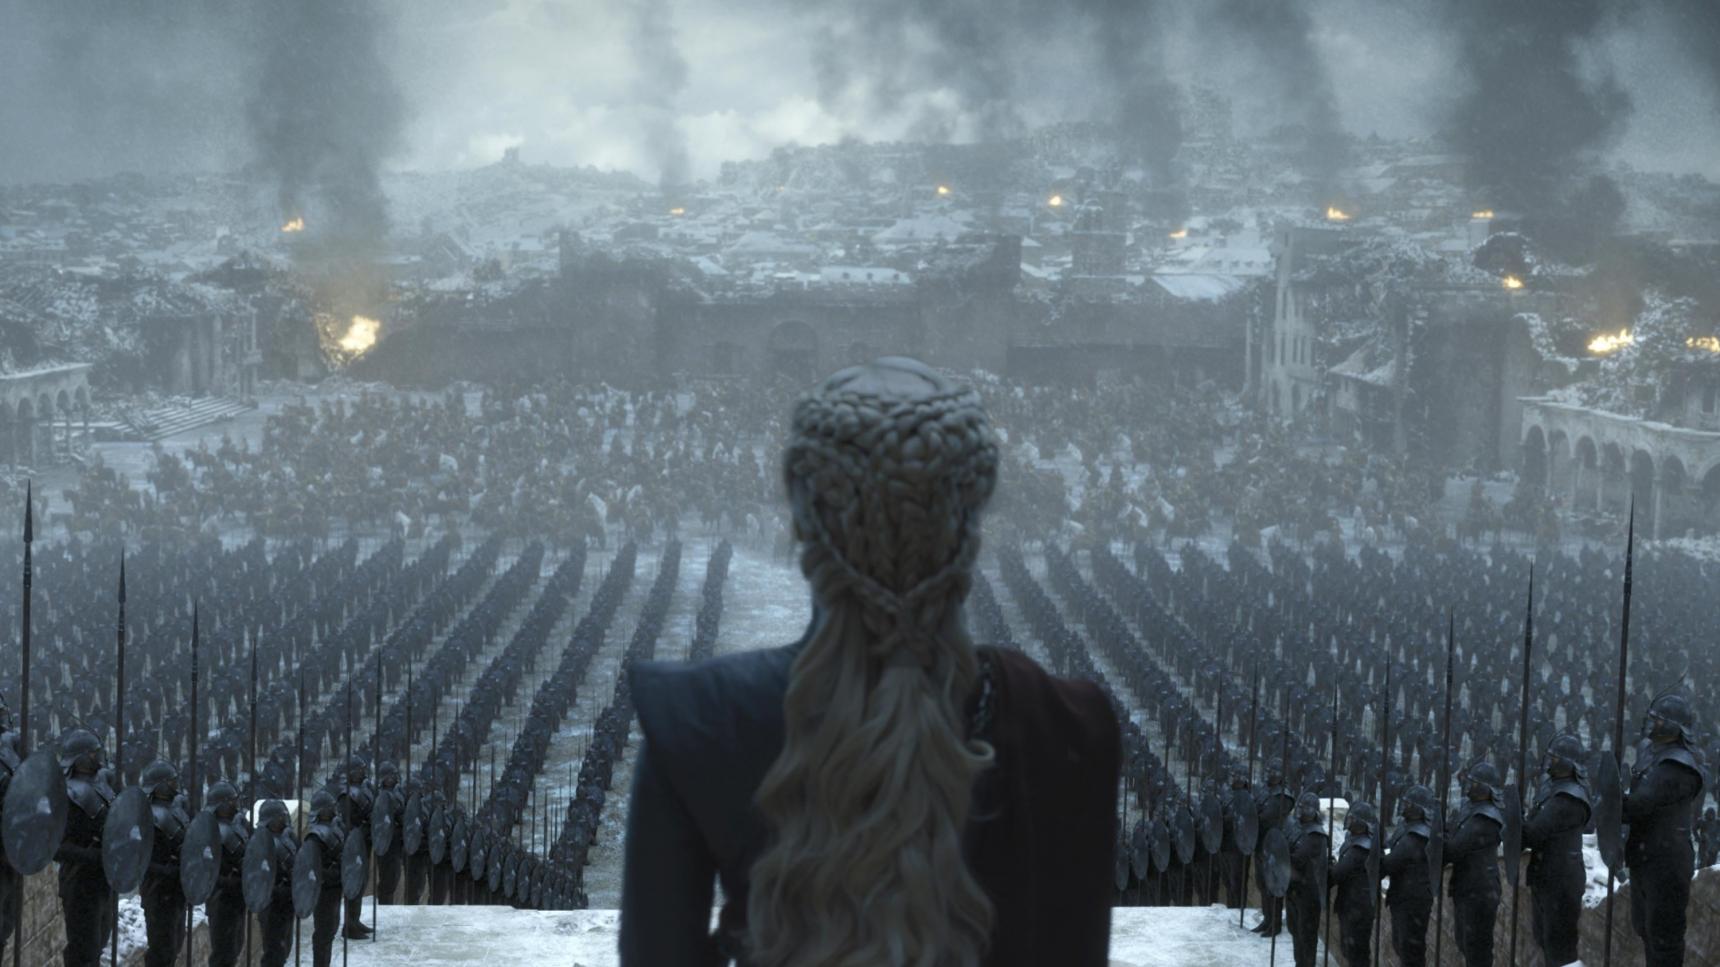 Poster del episodio 6 de Game of Thrones online